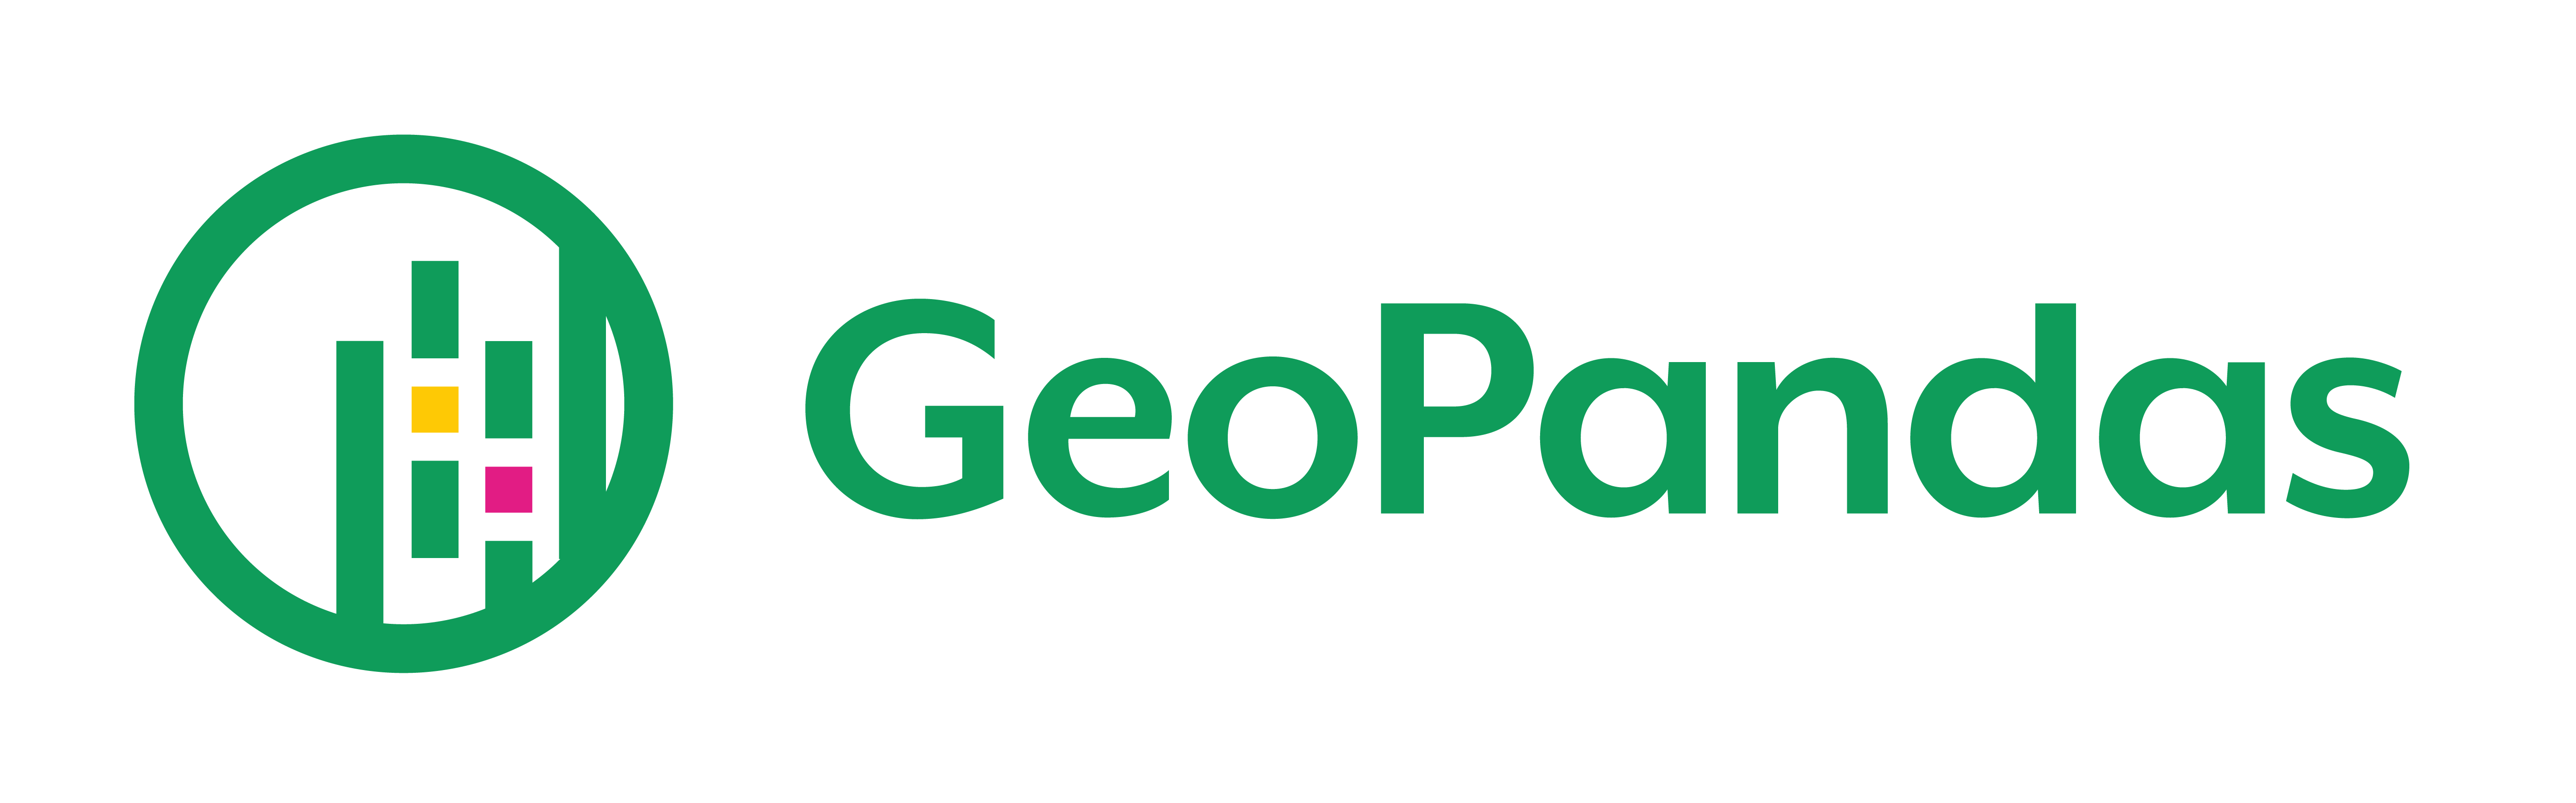 geopandas-logo